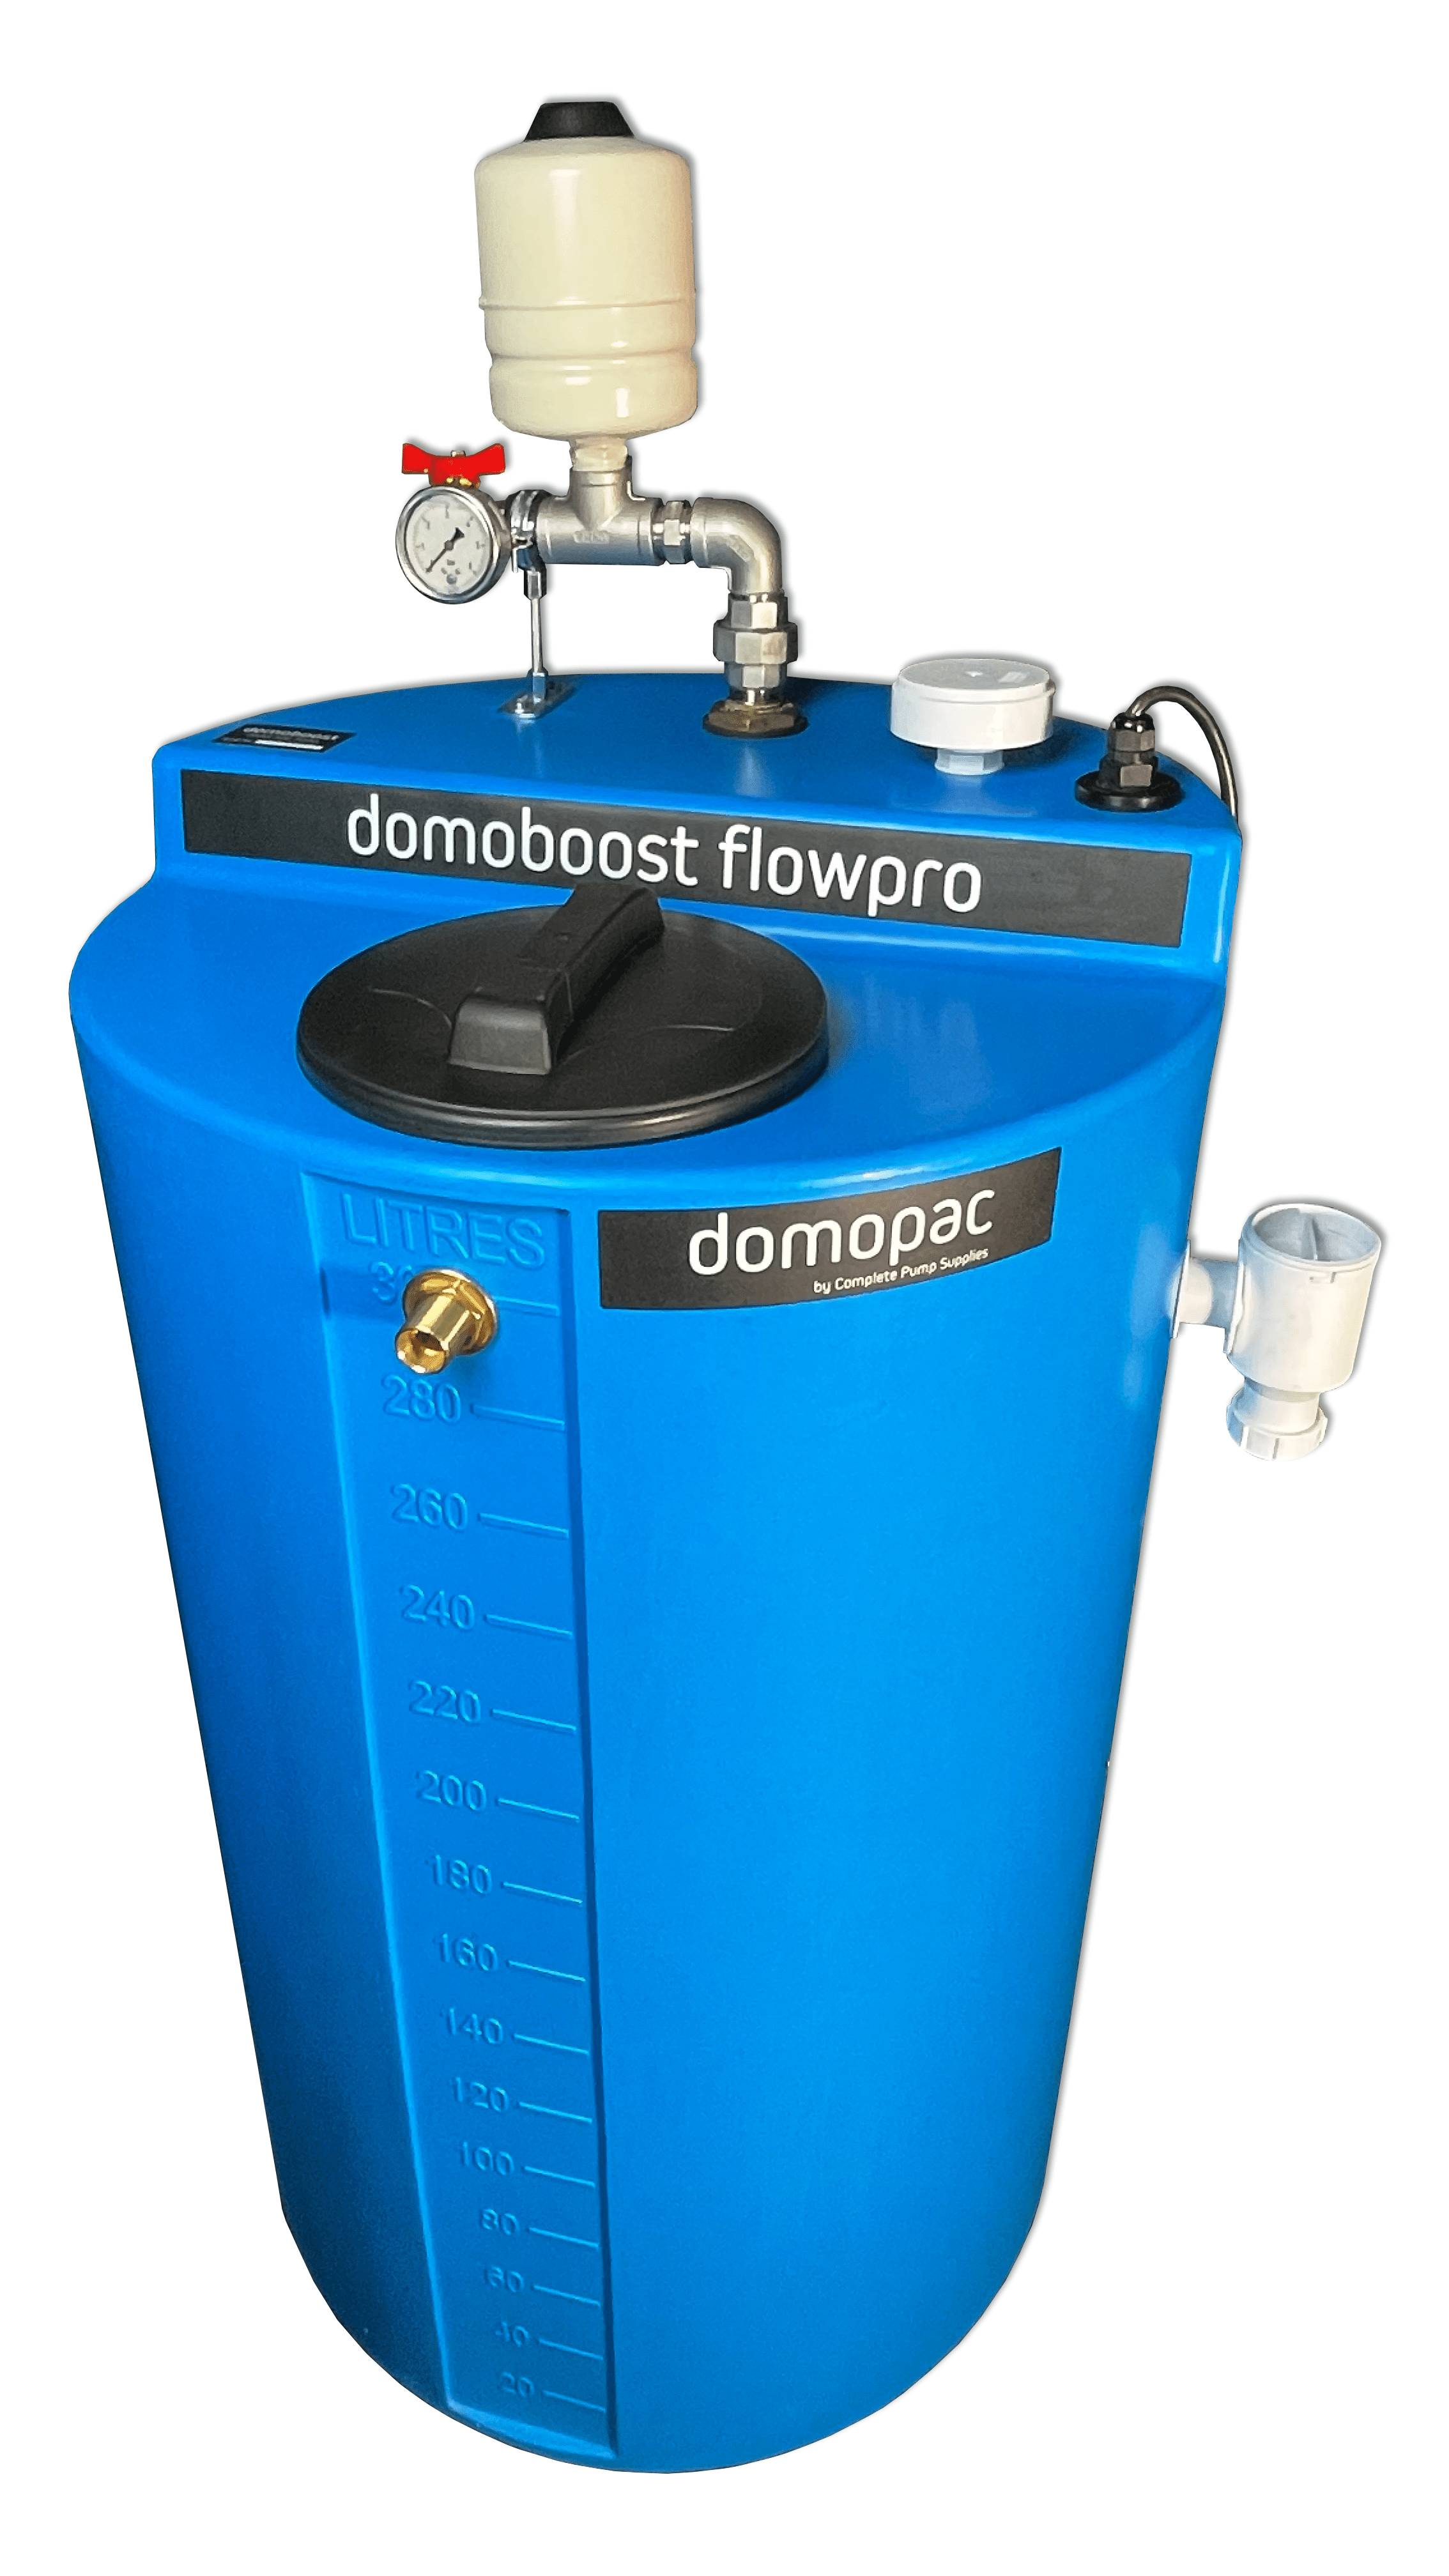 Domoboost Flowpro Home Booster Sets